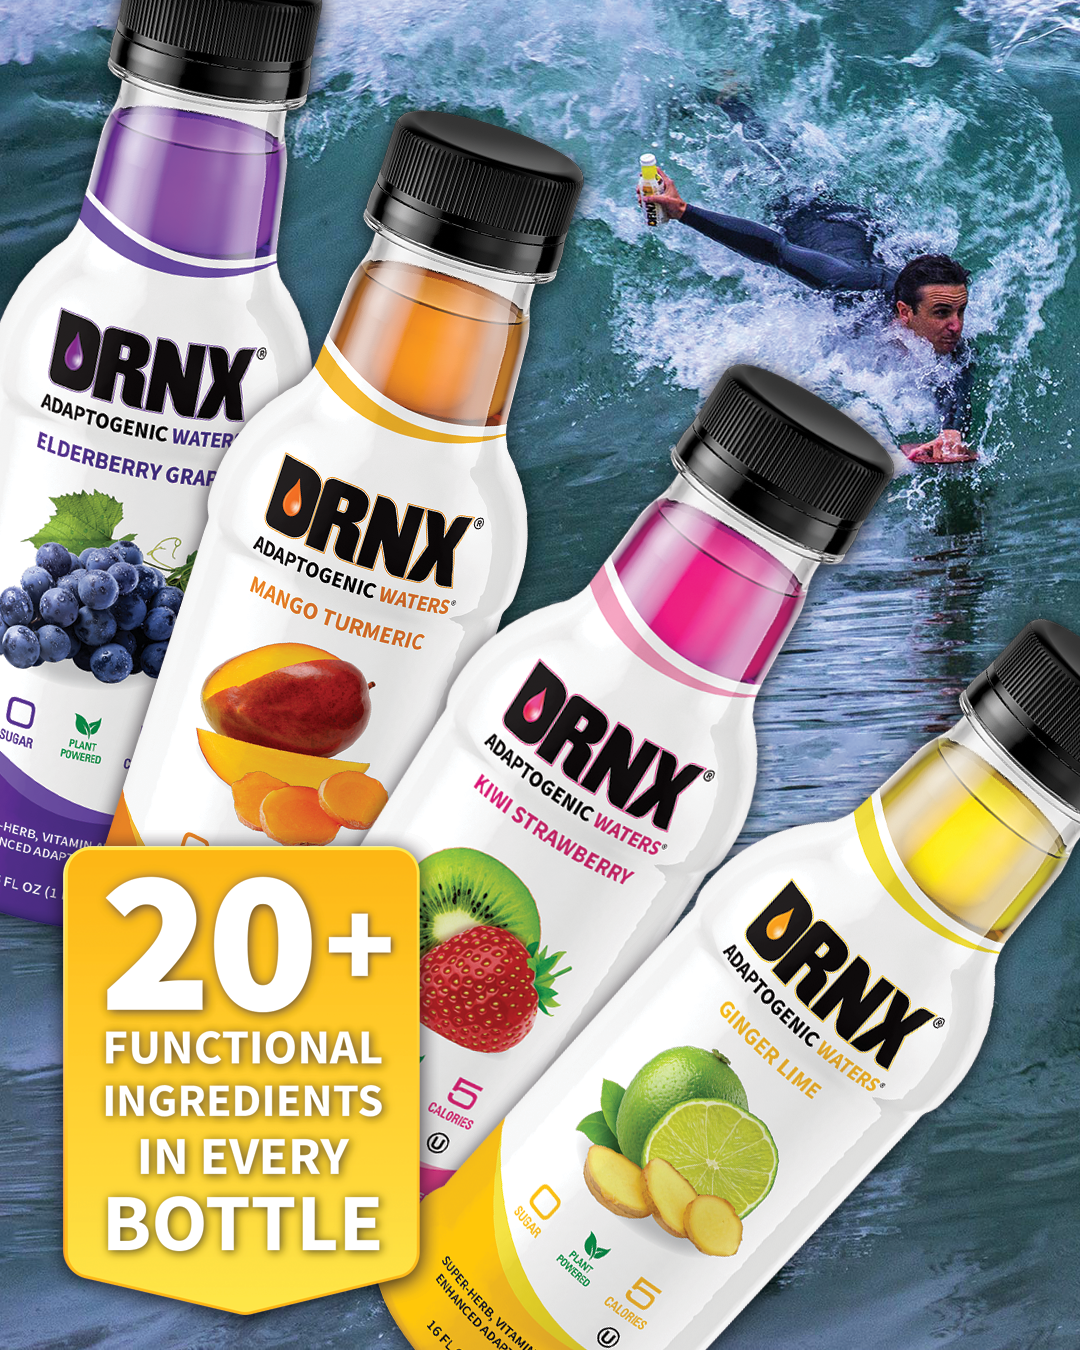 DRNX Adaptogenic Waters